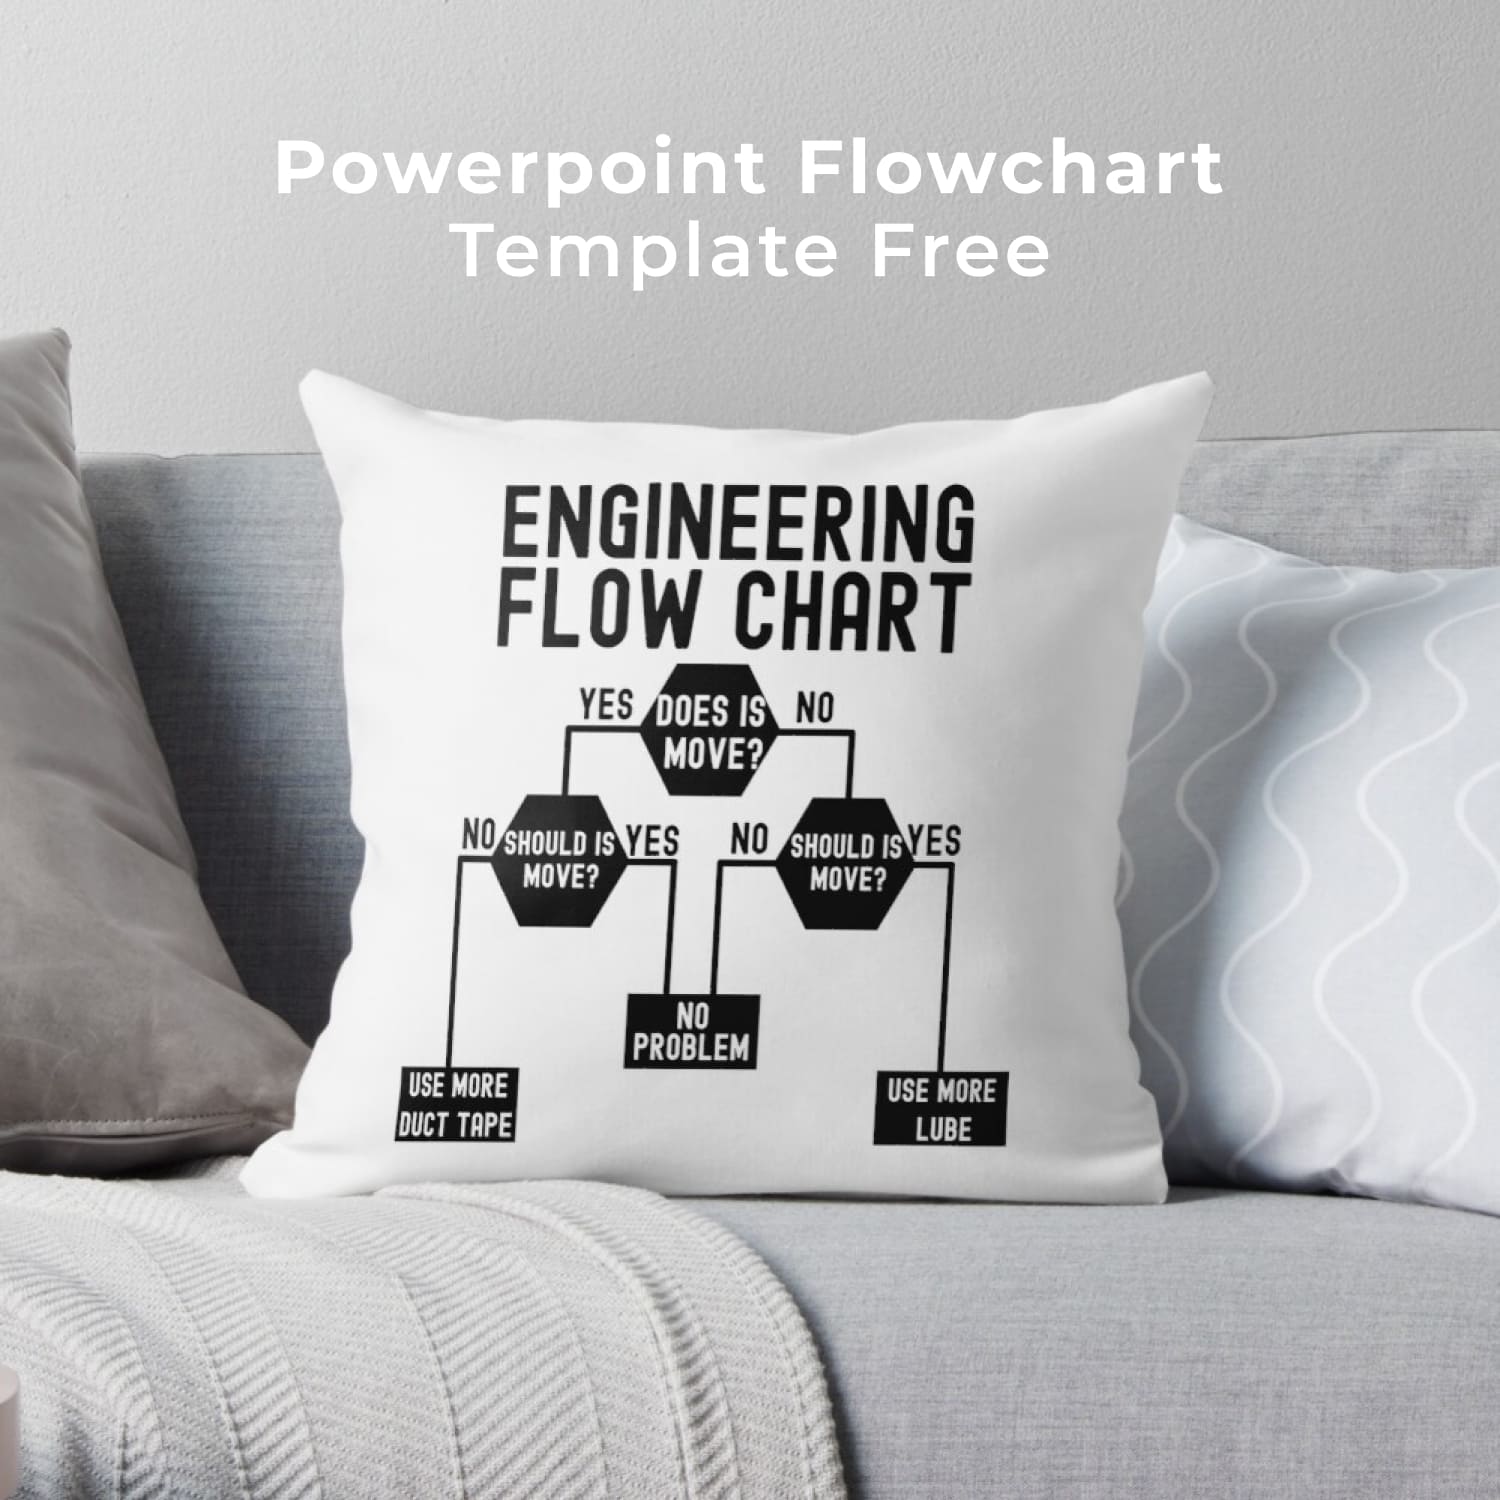 Minimal Powerpoint Flowchart Template Free MasterBundles